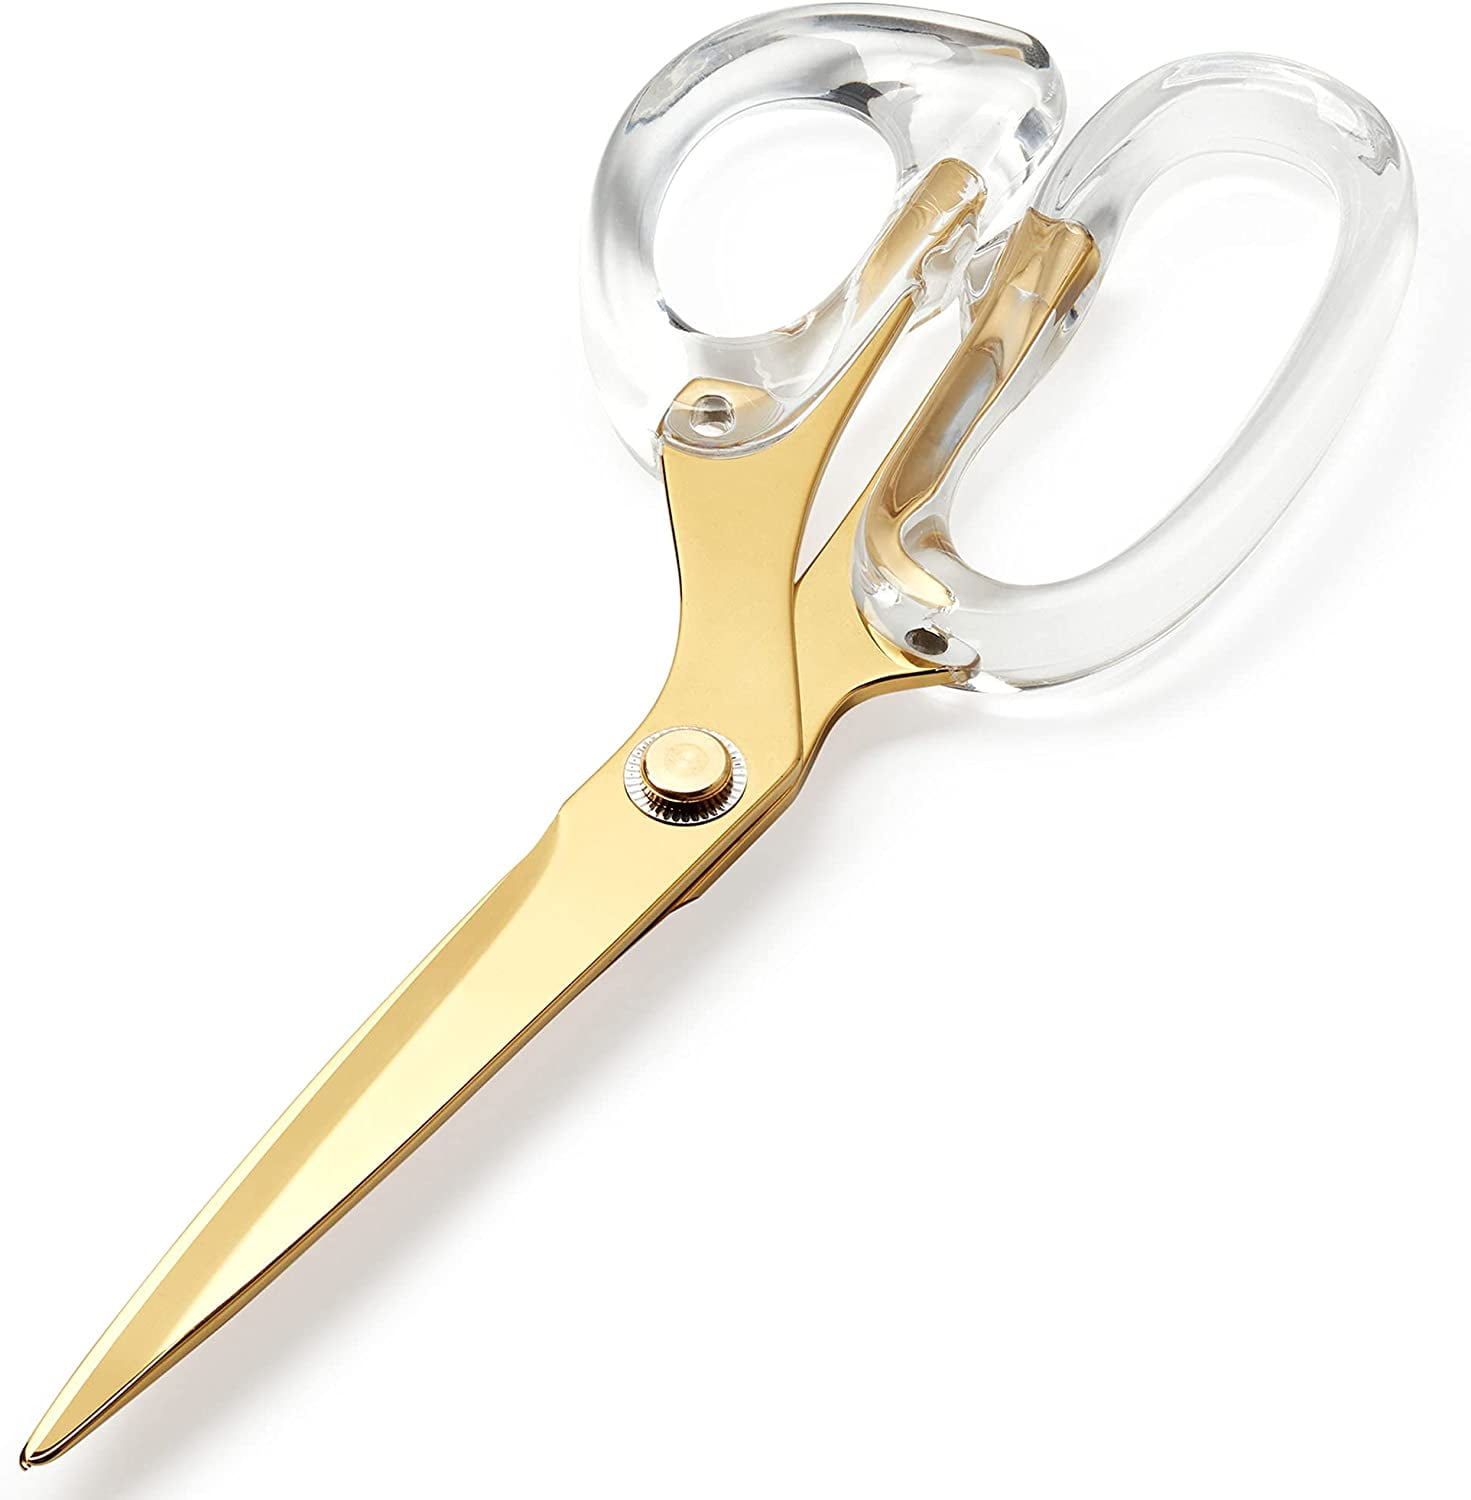 Stainless Steel Office Scissors, 8.5 Long, 3.75 Cut Length, Black Offset  Handle